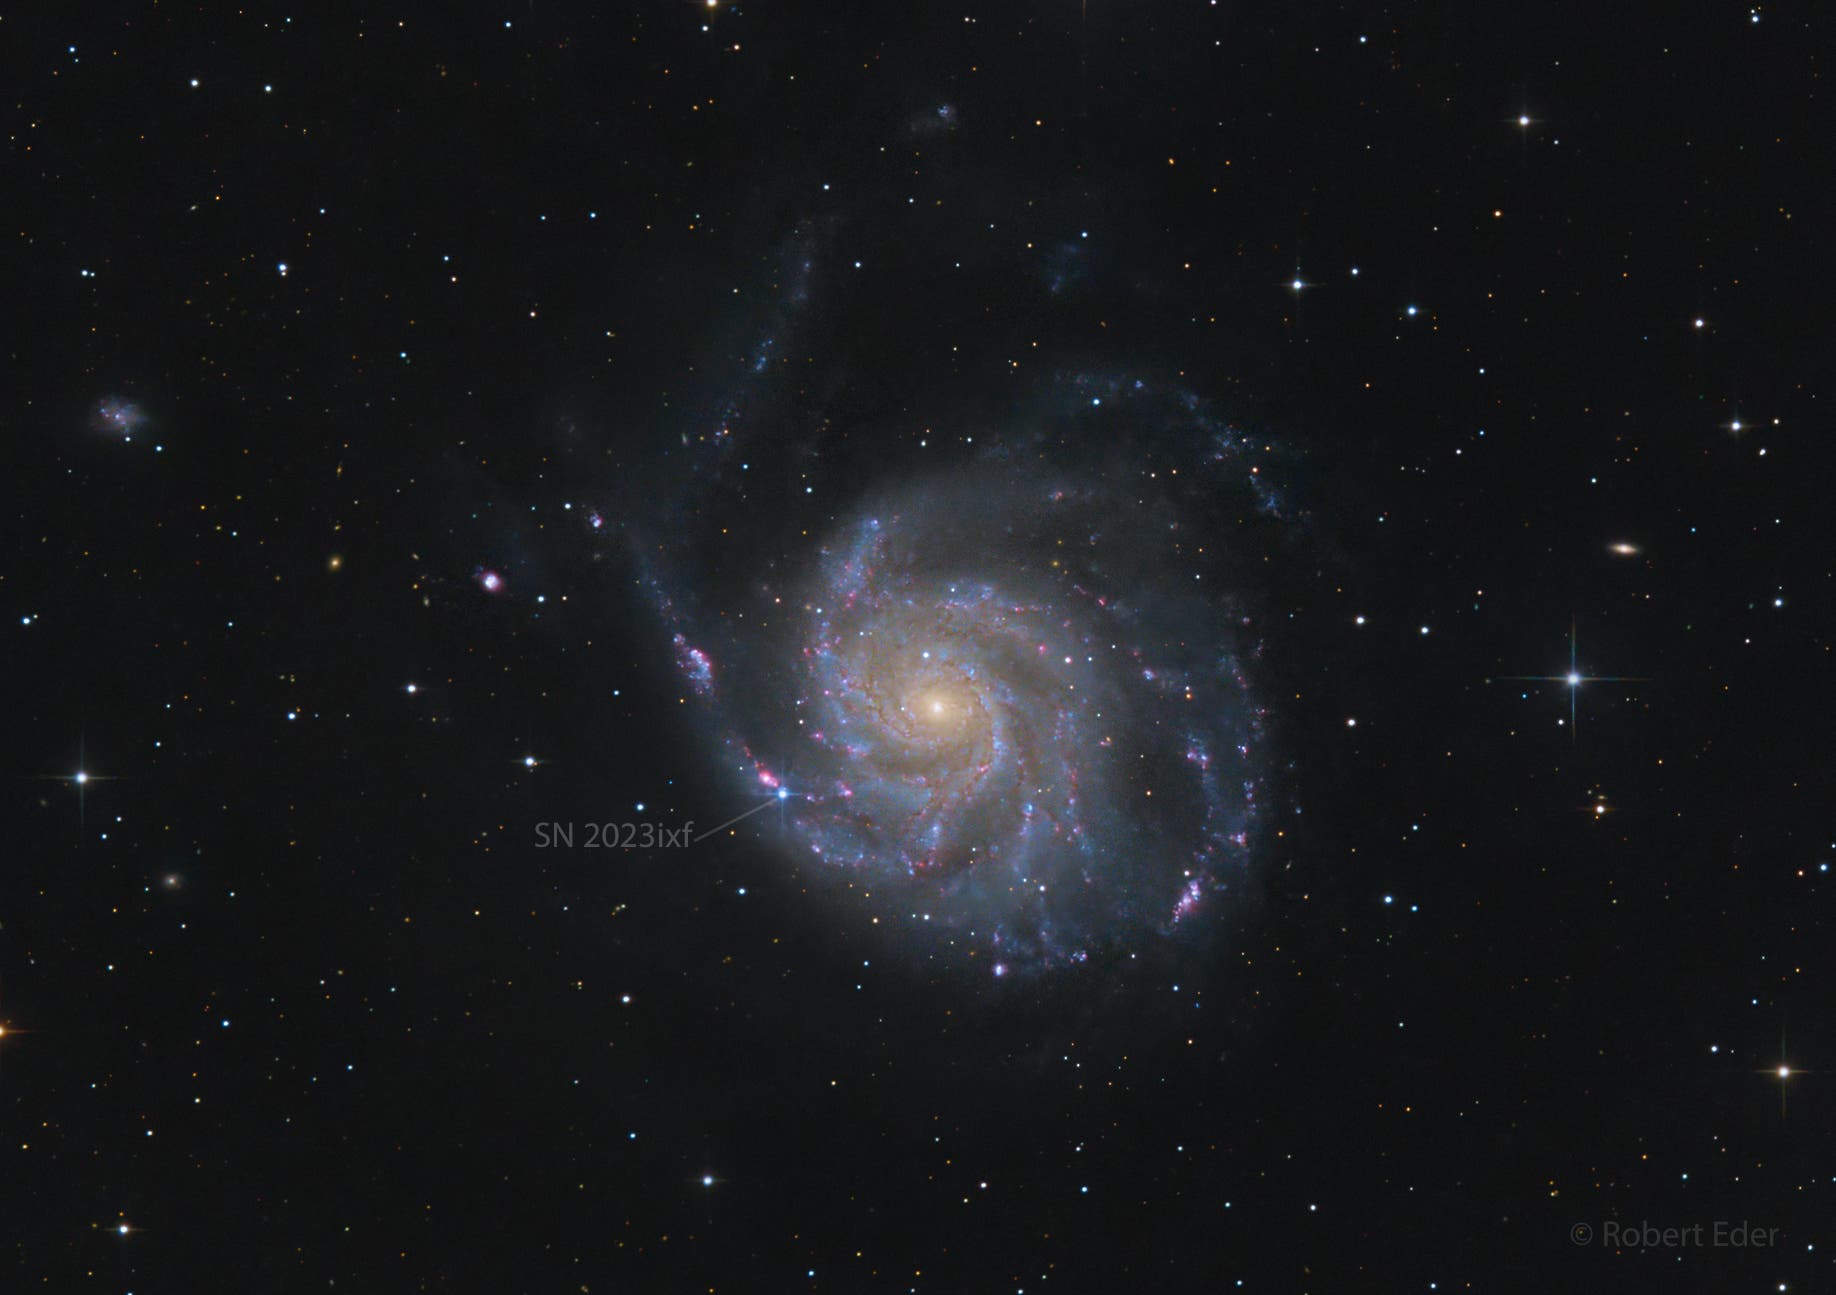 Feuerrad-Galaxie M101 mit Supernova SN2023ixf